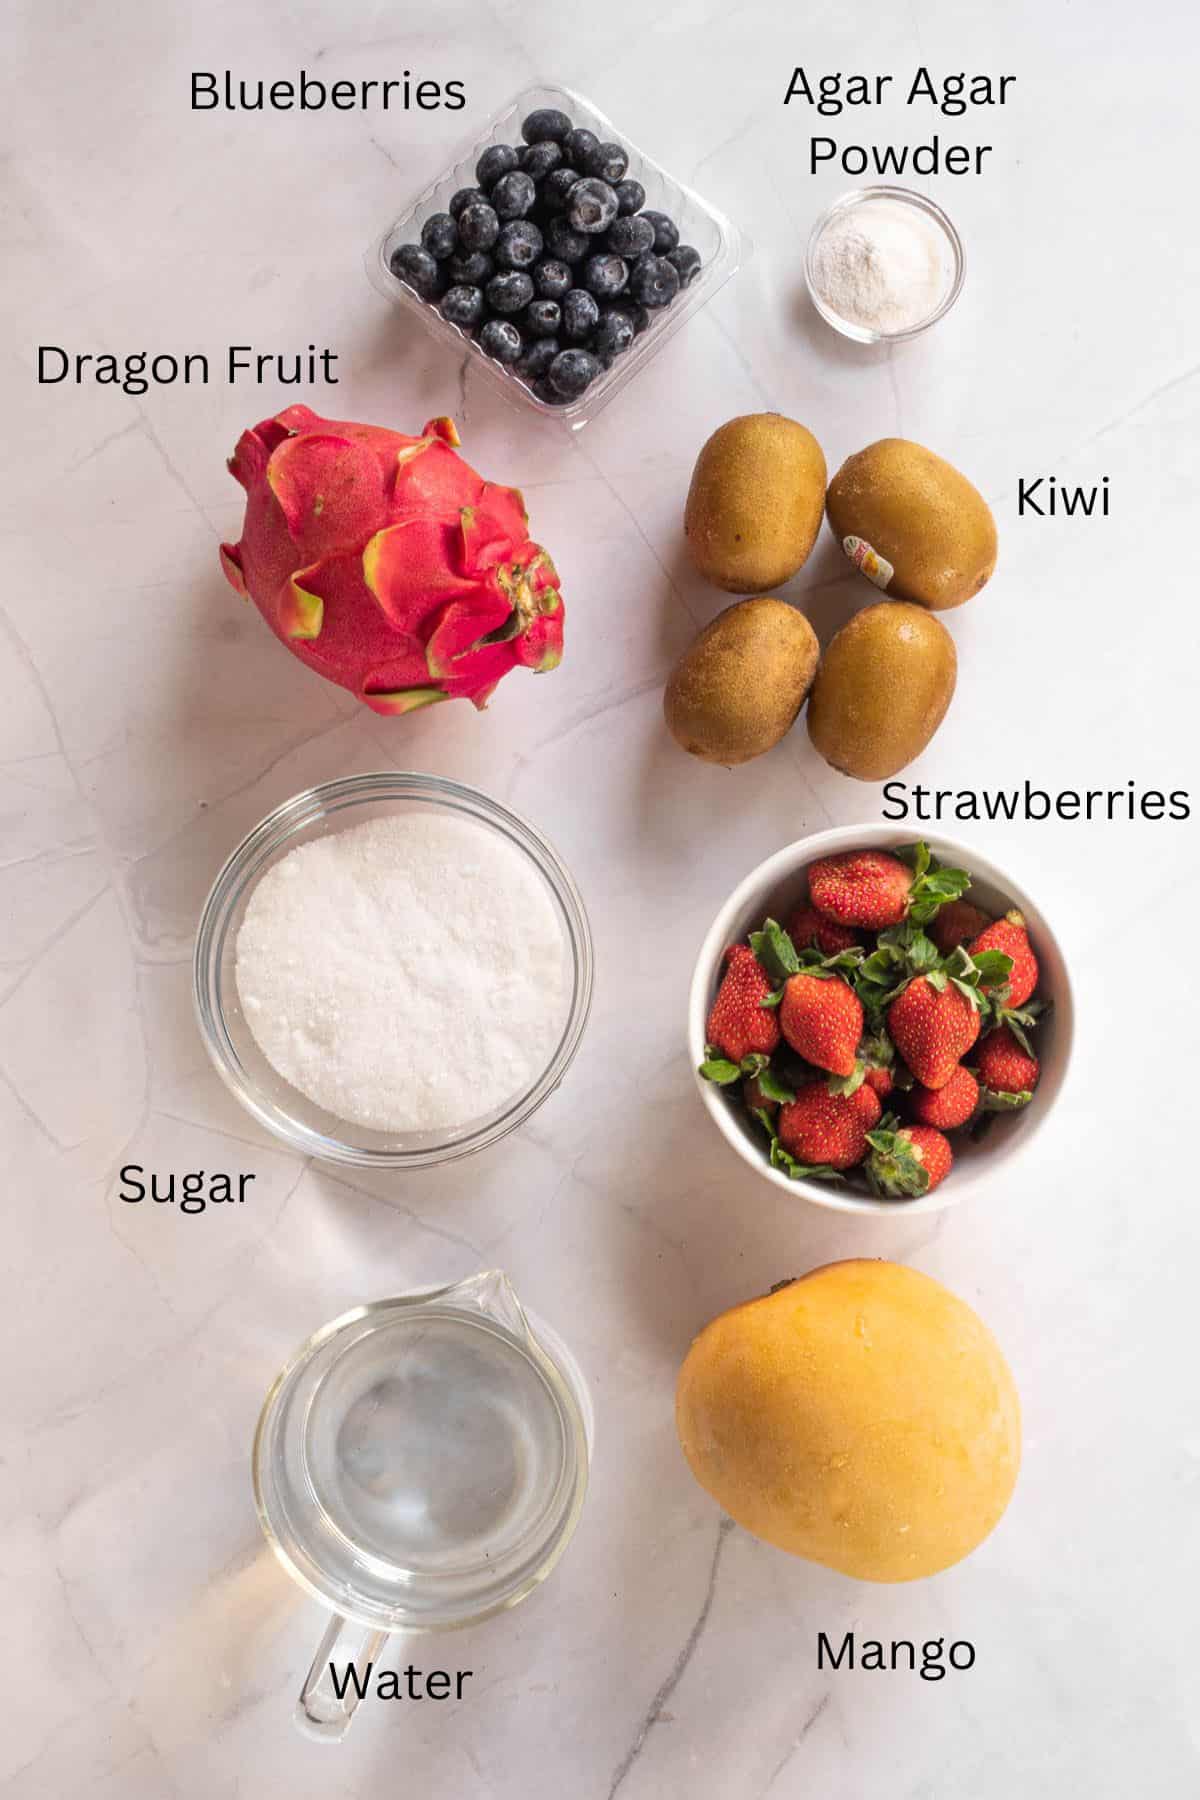 Dragon fruit, mango, strawberries, kiwis, blueberries, water, sugar and agar agar powder against a marble background.